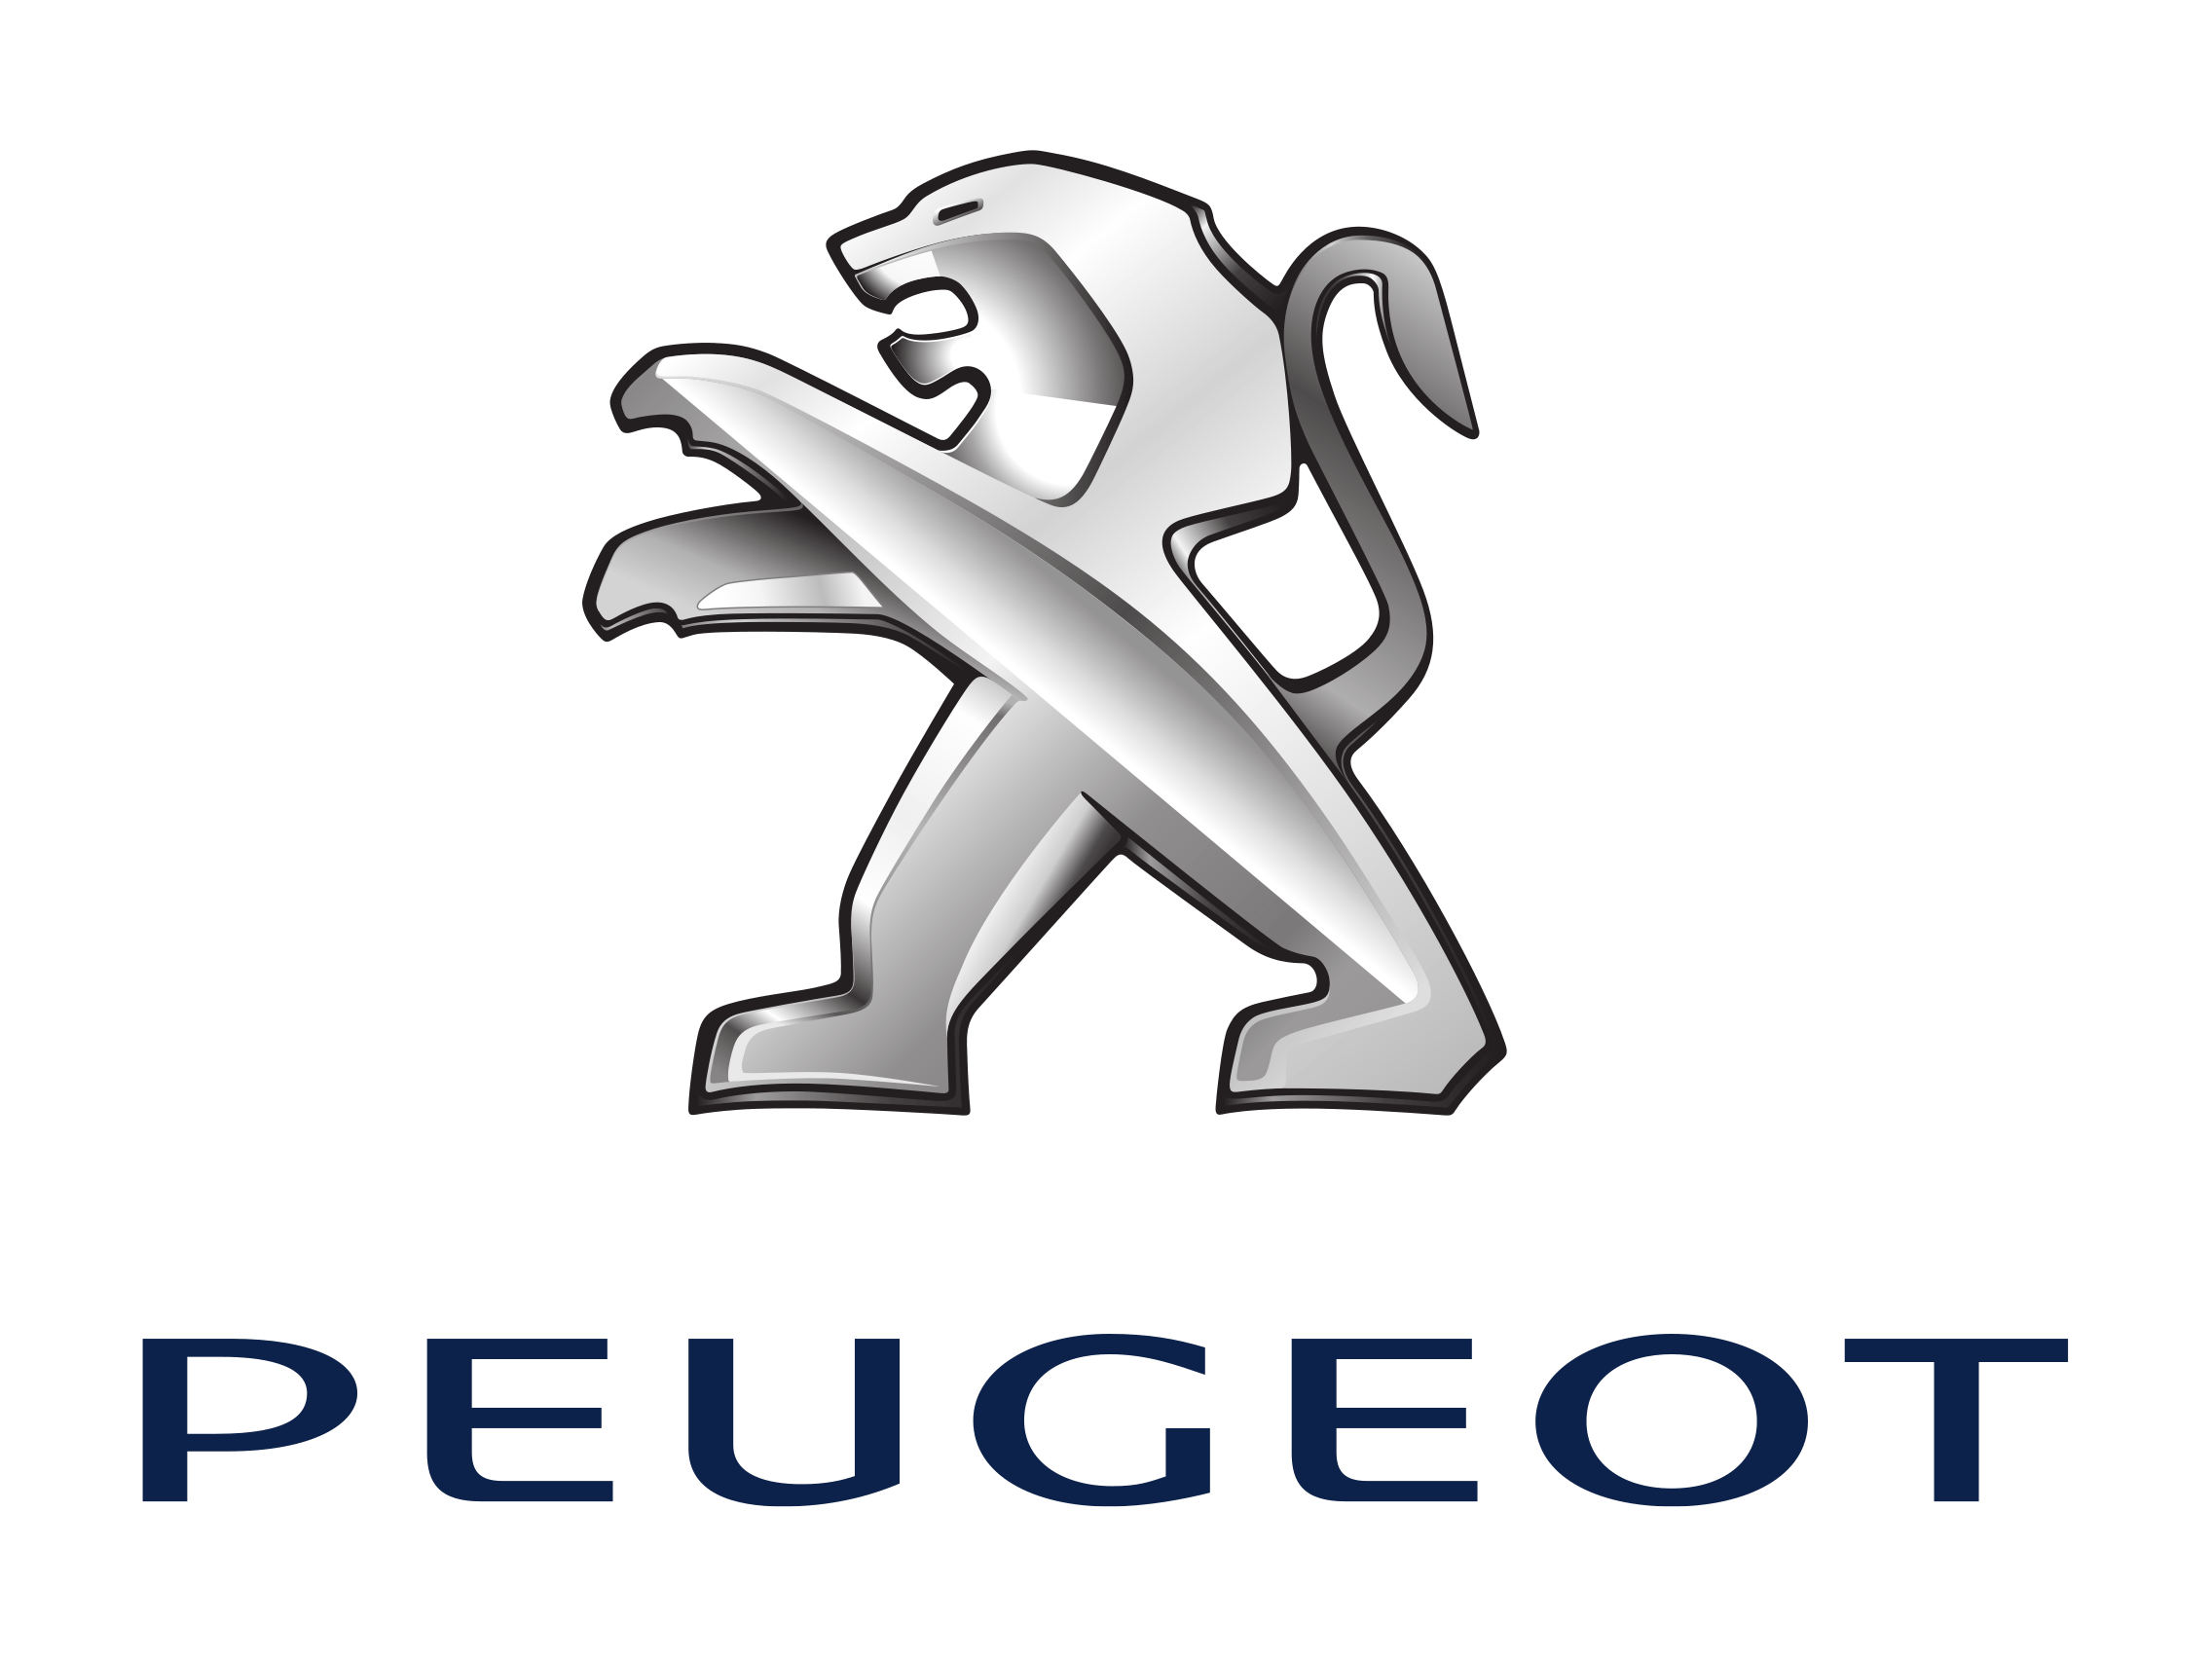 Peugeot Logo - Peugeot logo